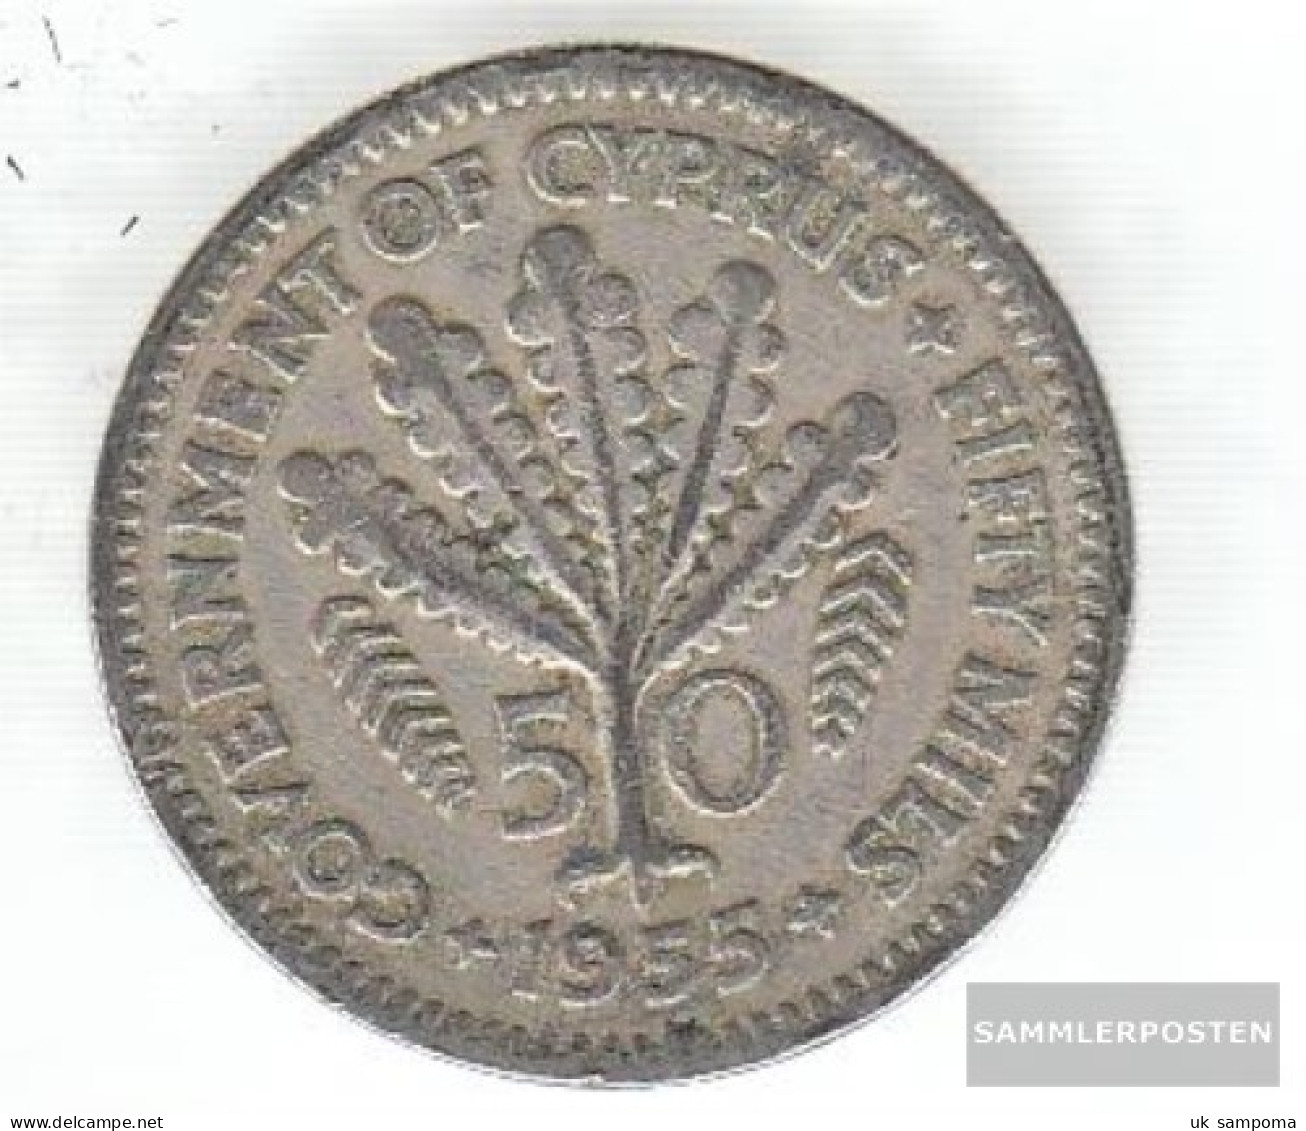 Cyprus Km-number. : 36 1955 Very Fine Copper-Nickel Very Fine 1955 50 Mils Elizabeth II. - Cyprus